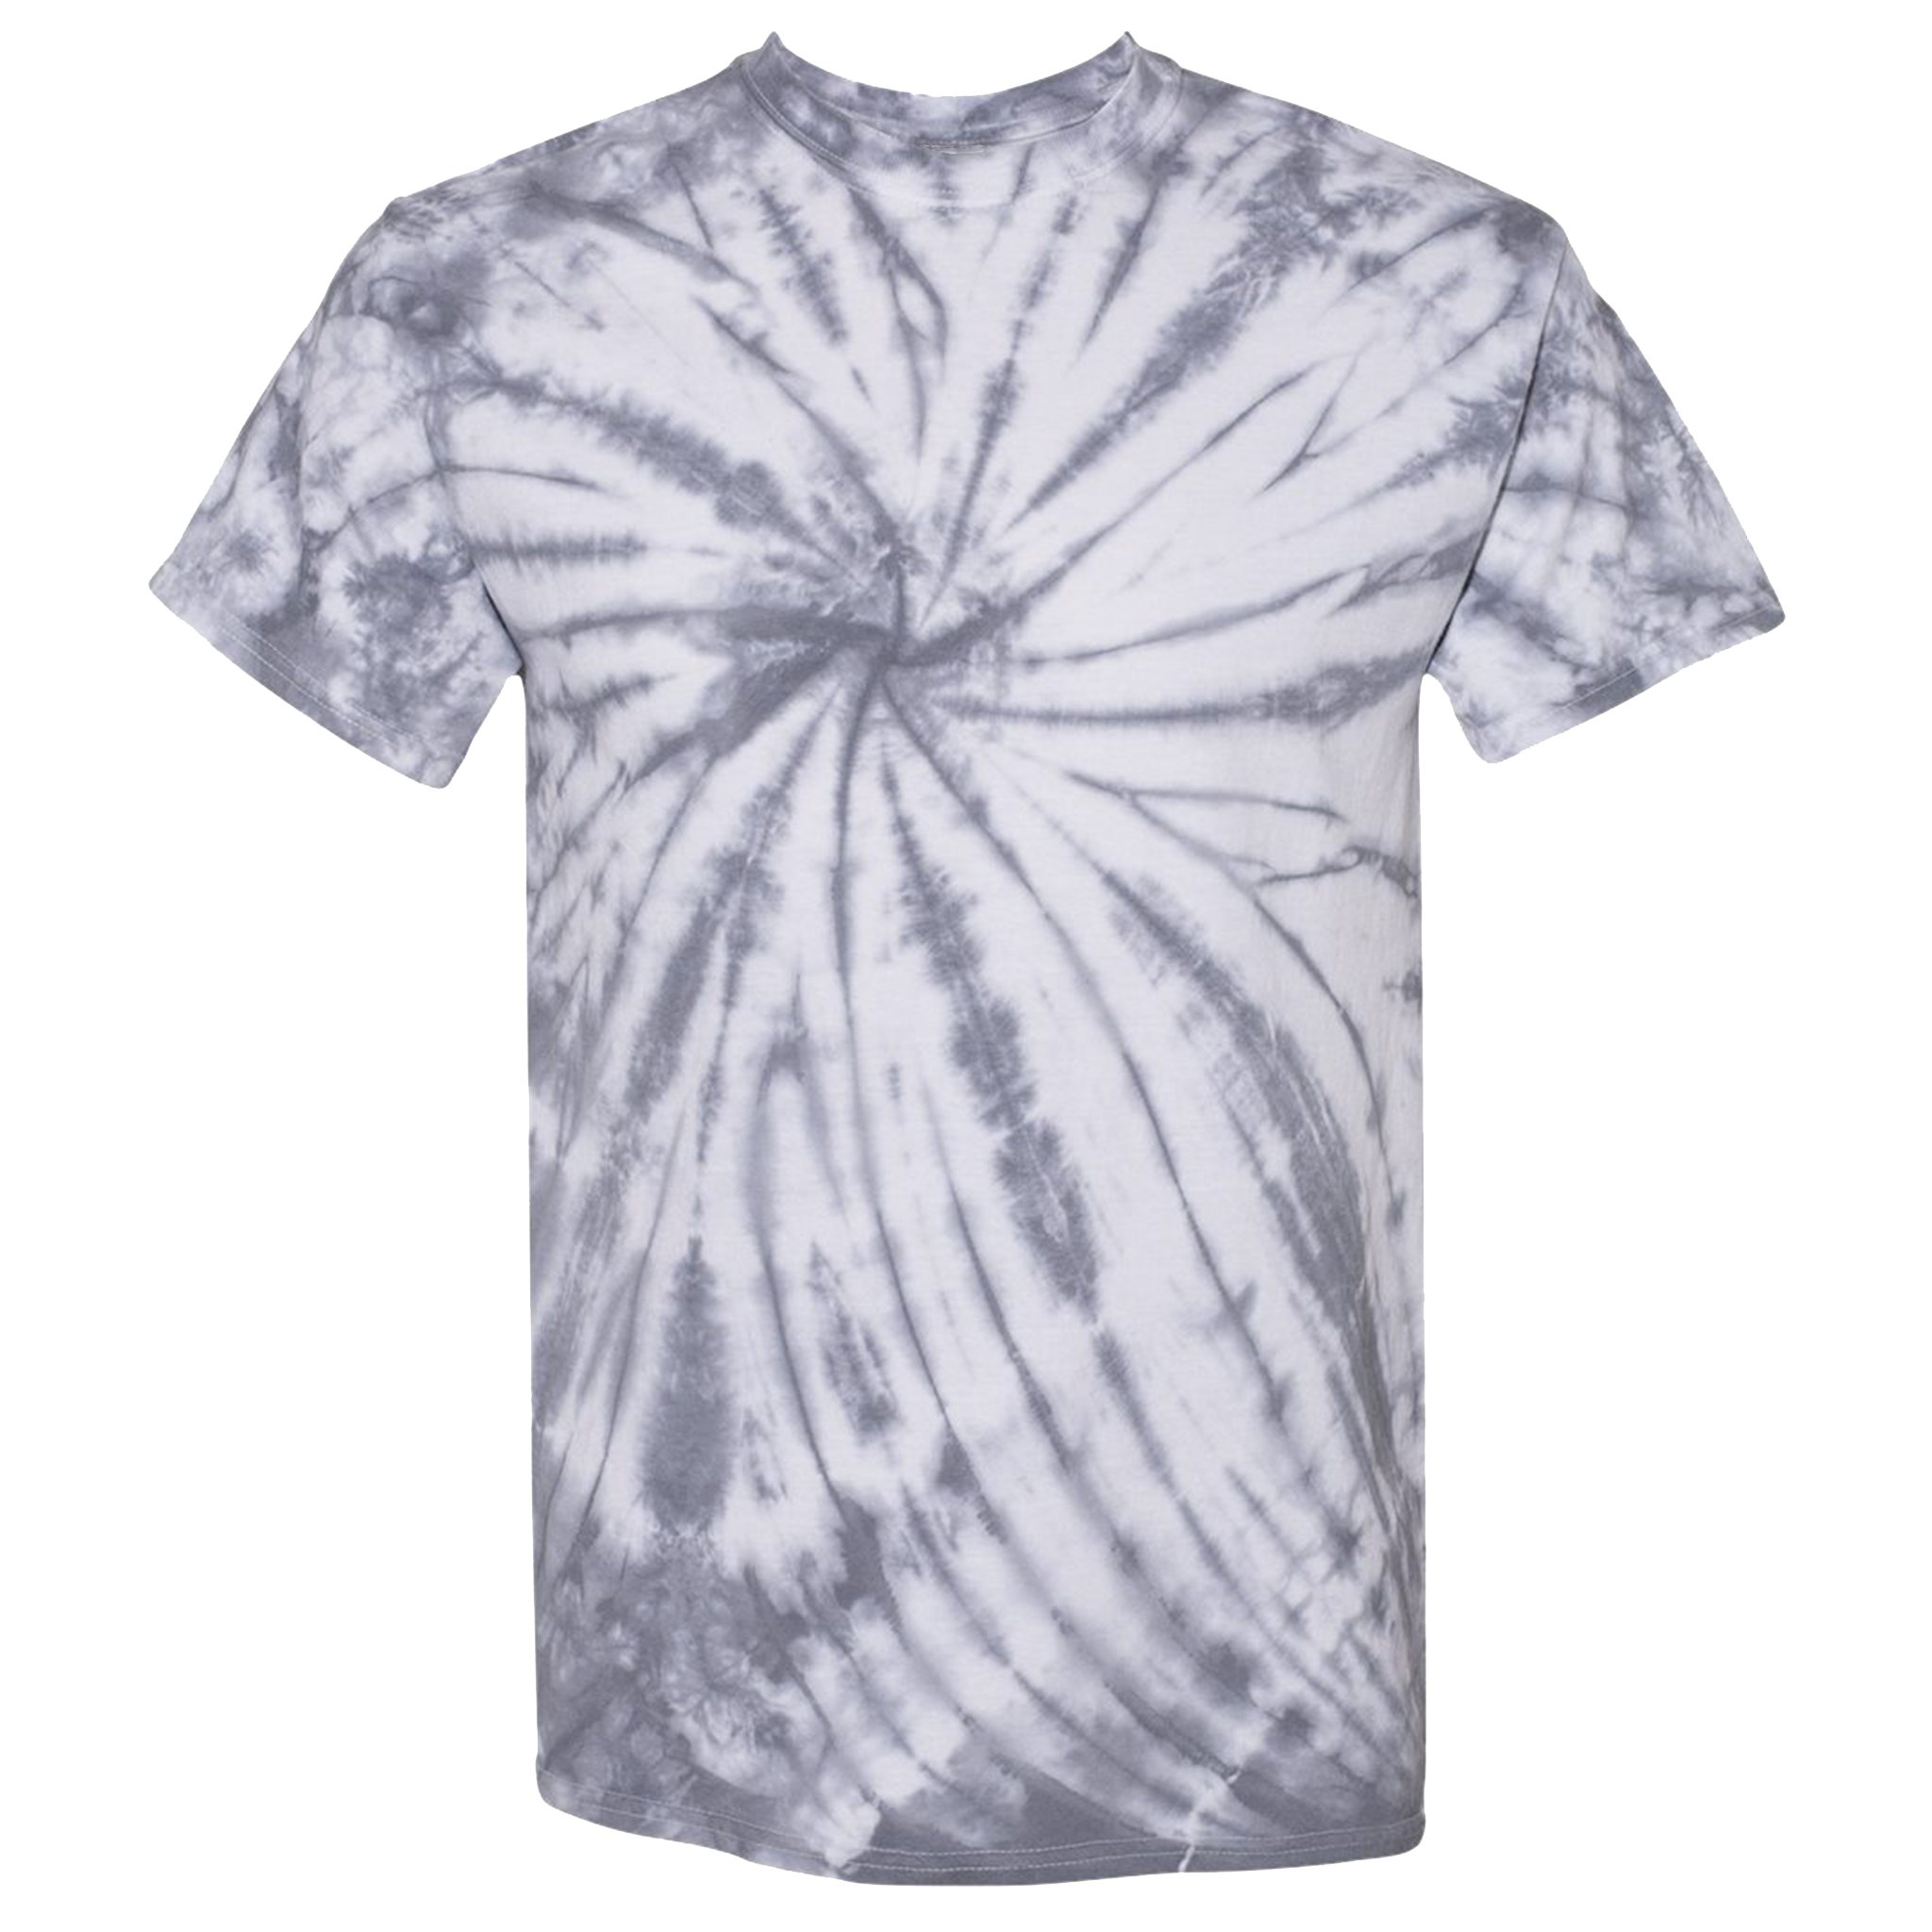 OmniT-Shirt Quick Silver Tie Dye Liquid 